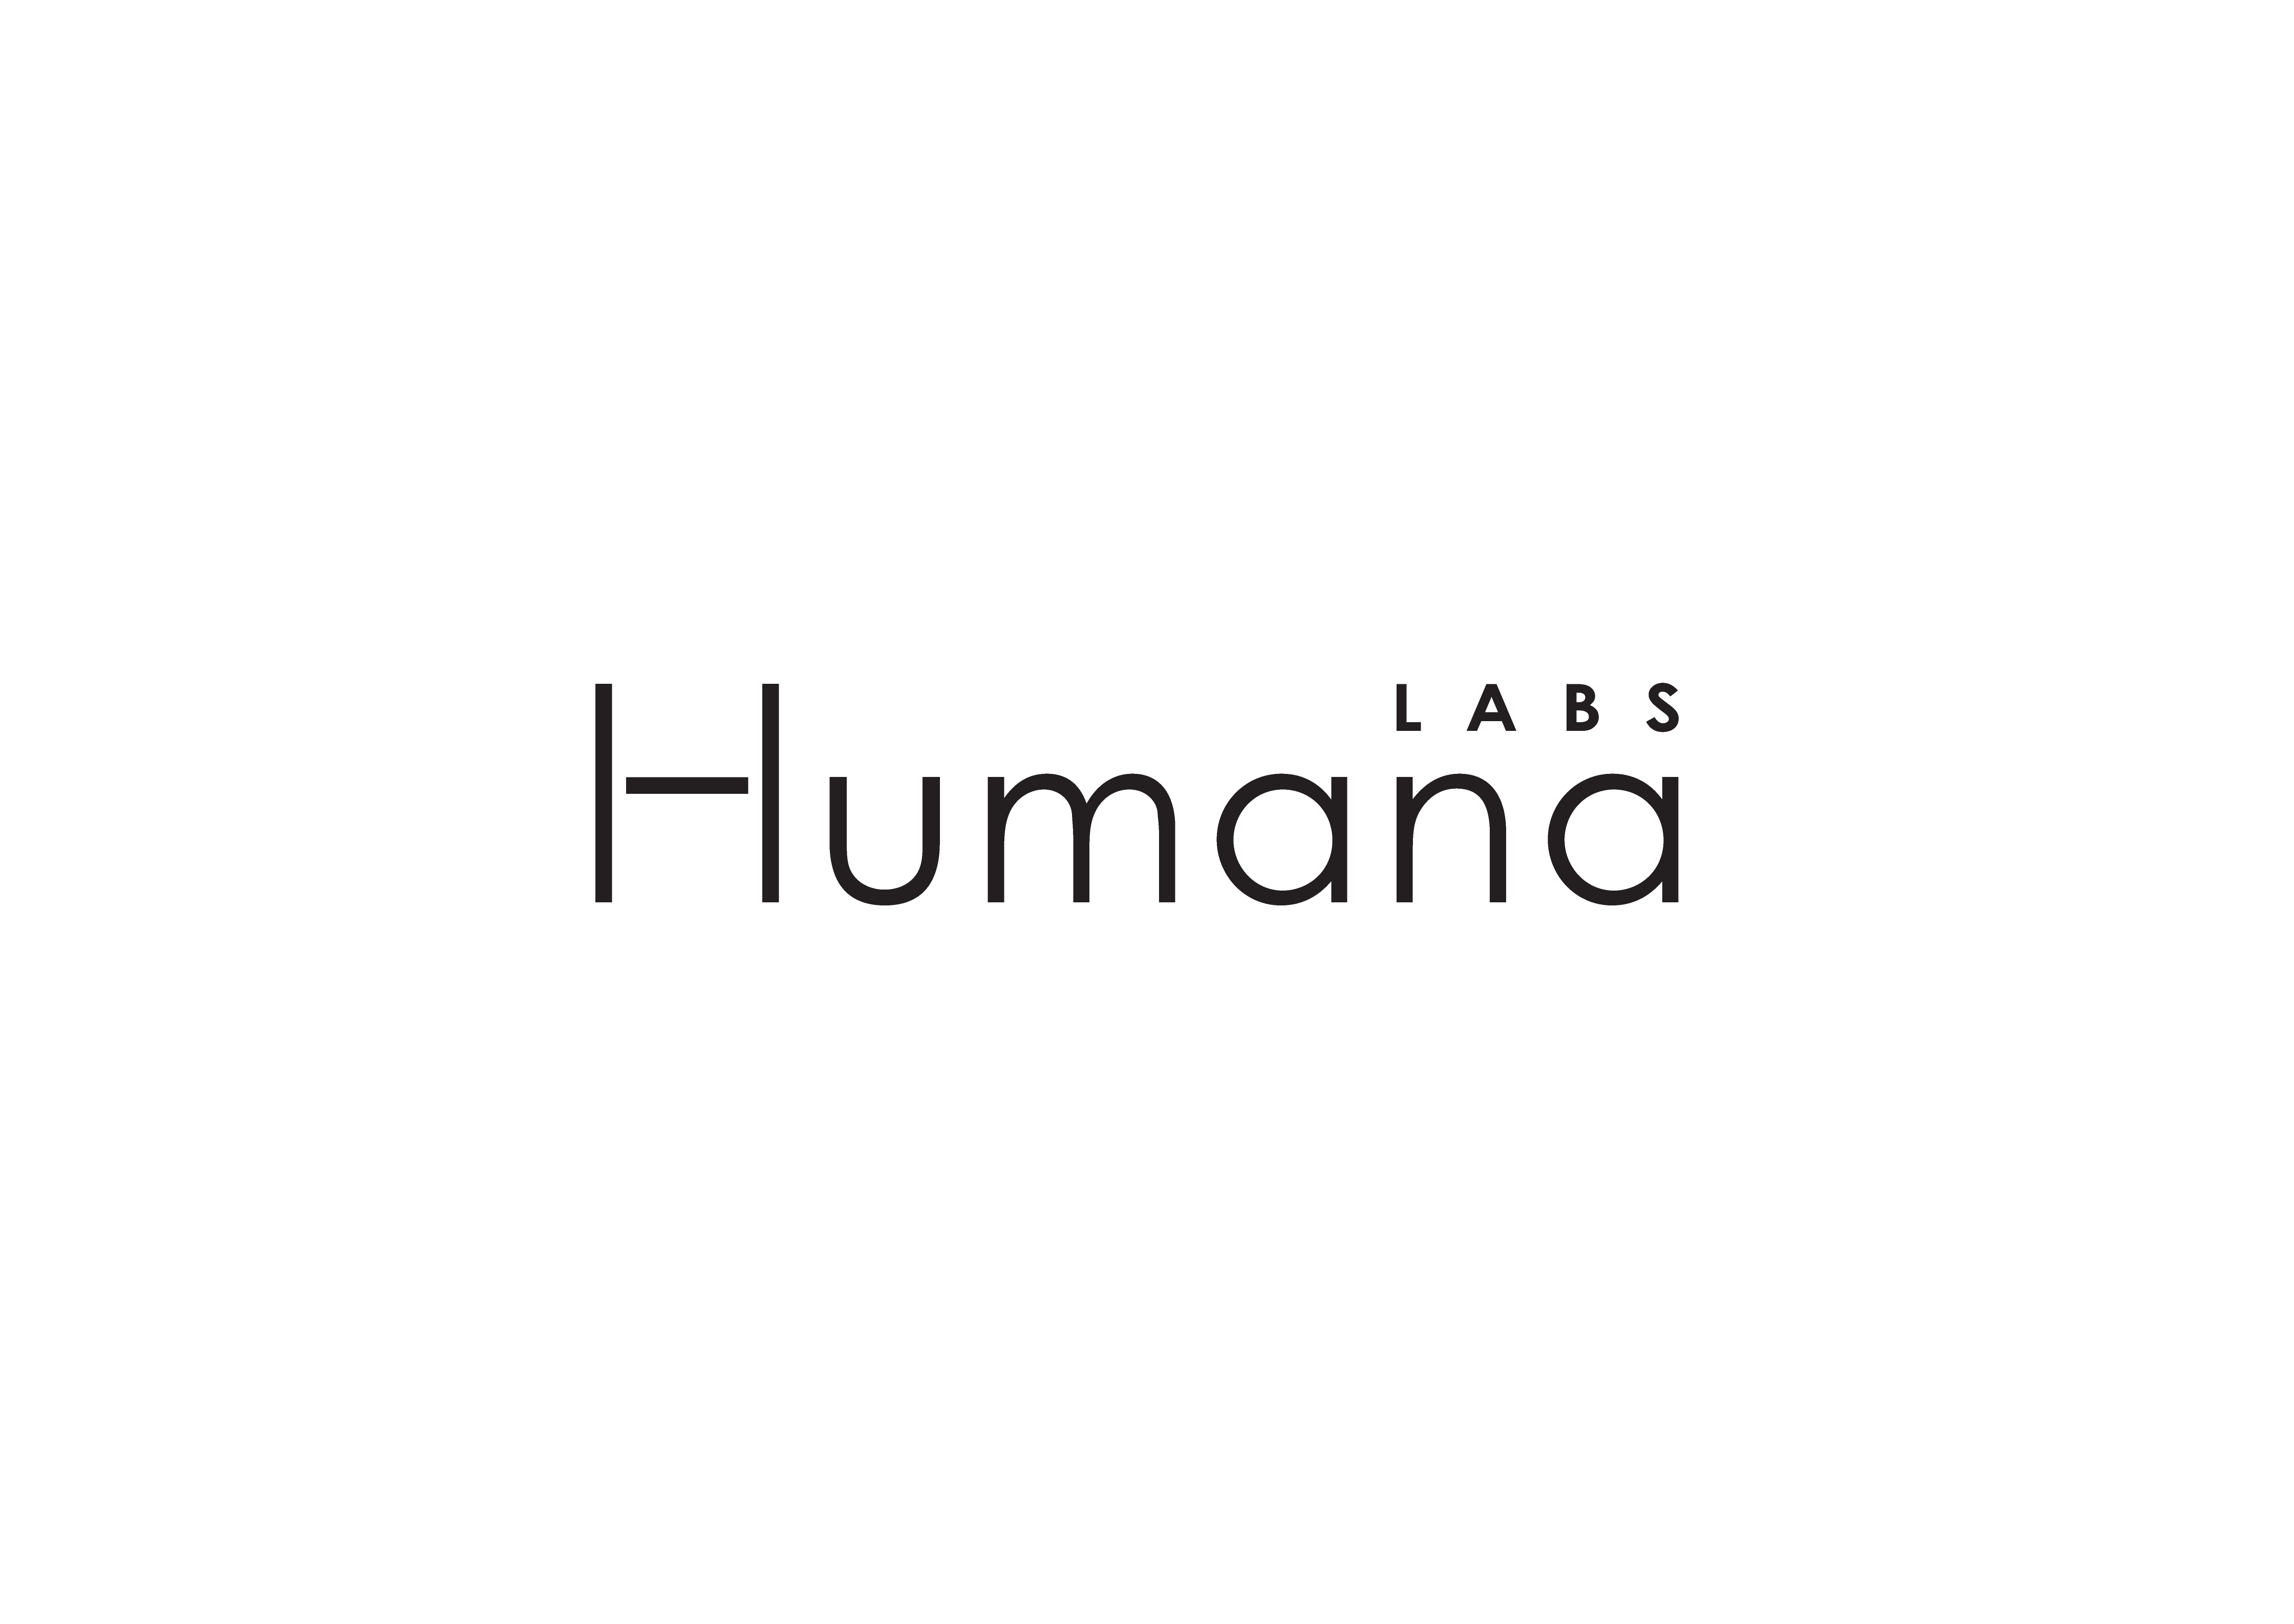 Humana Labs by JAVI AGENCY